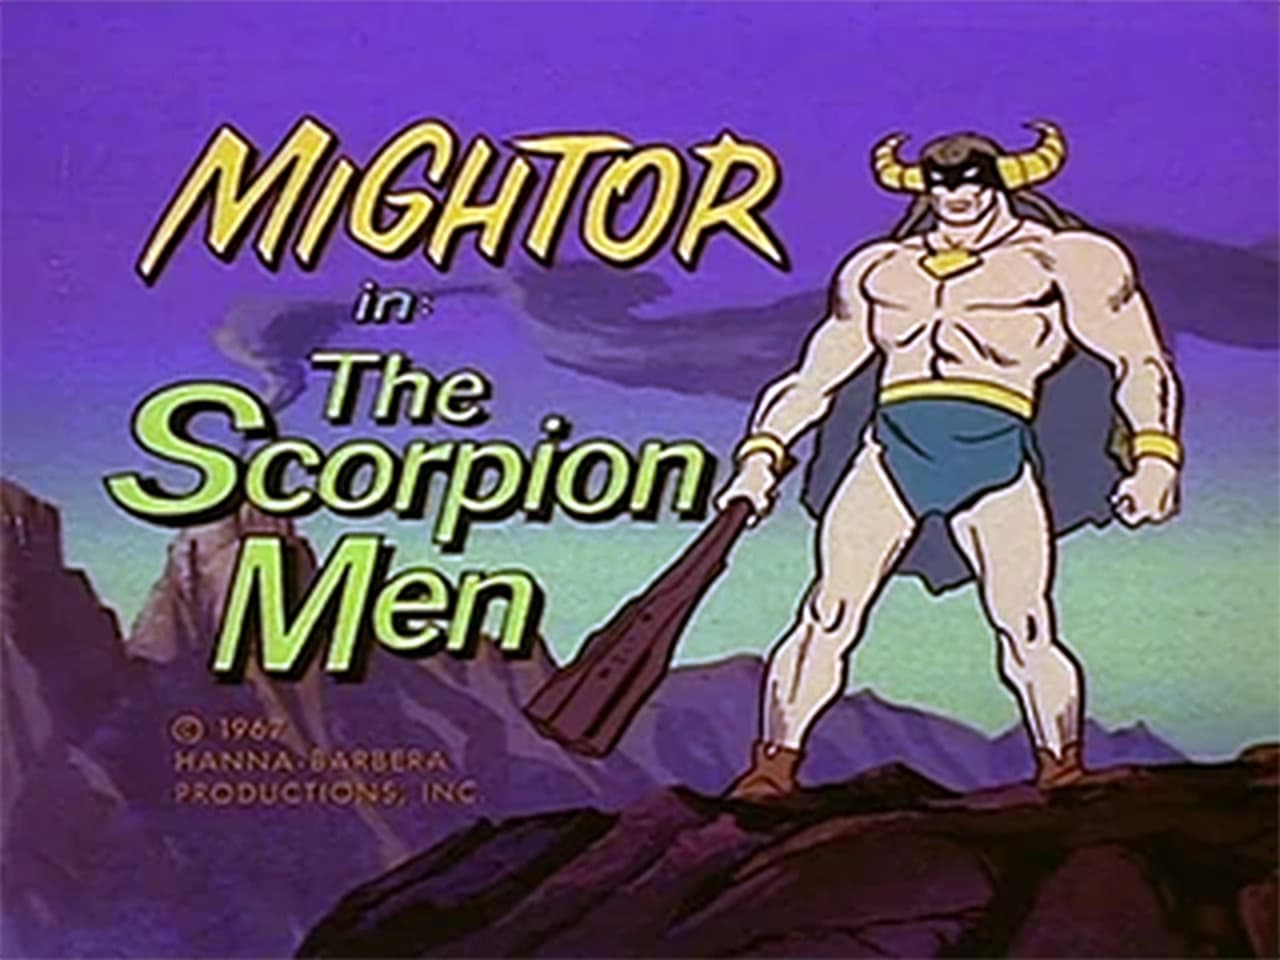 The Scorpion Men